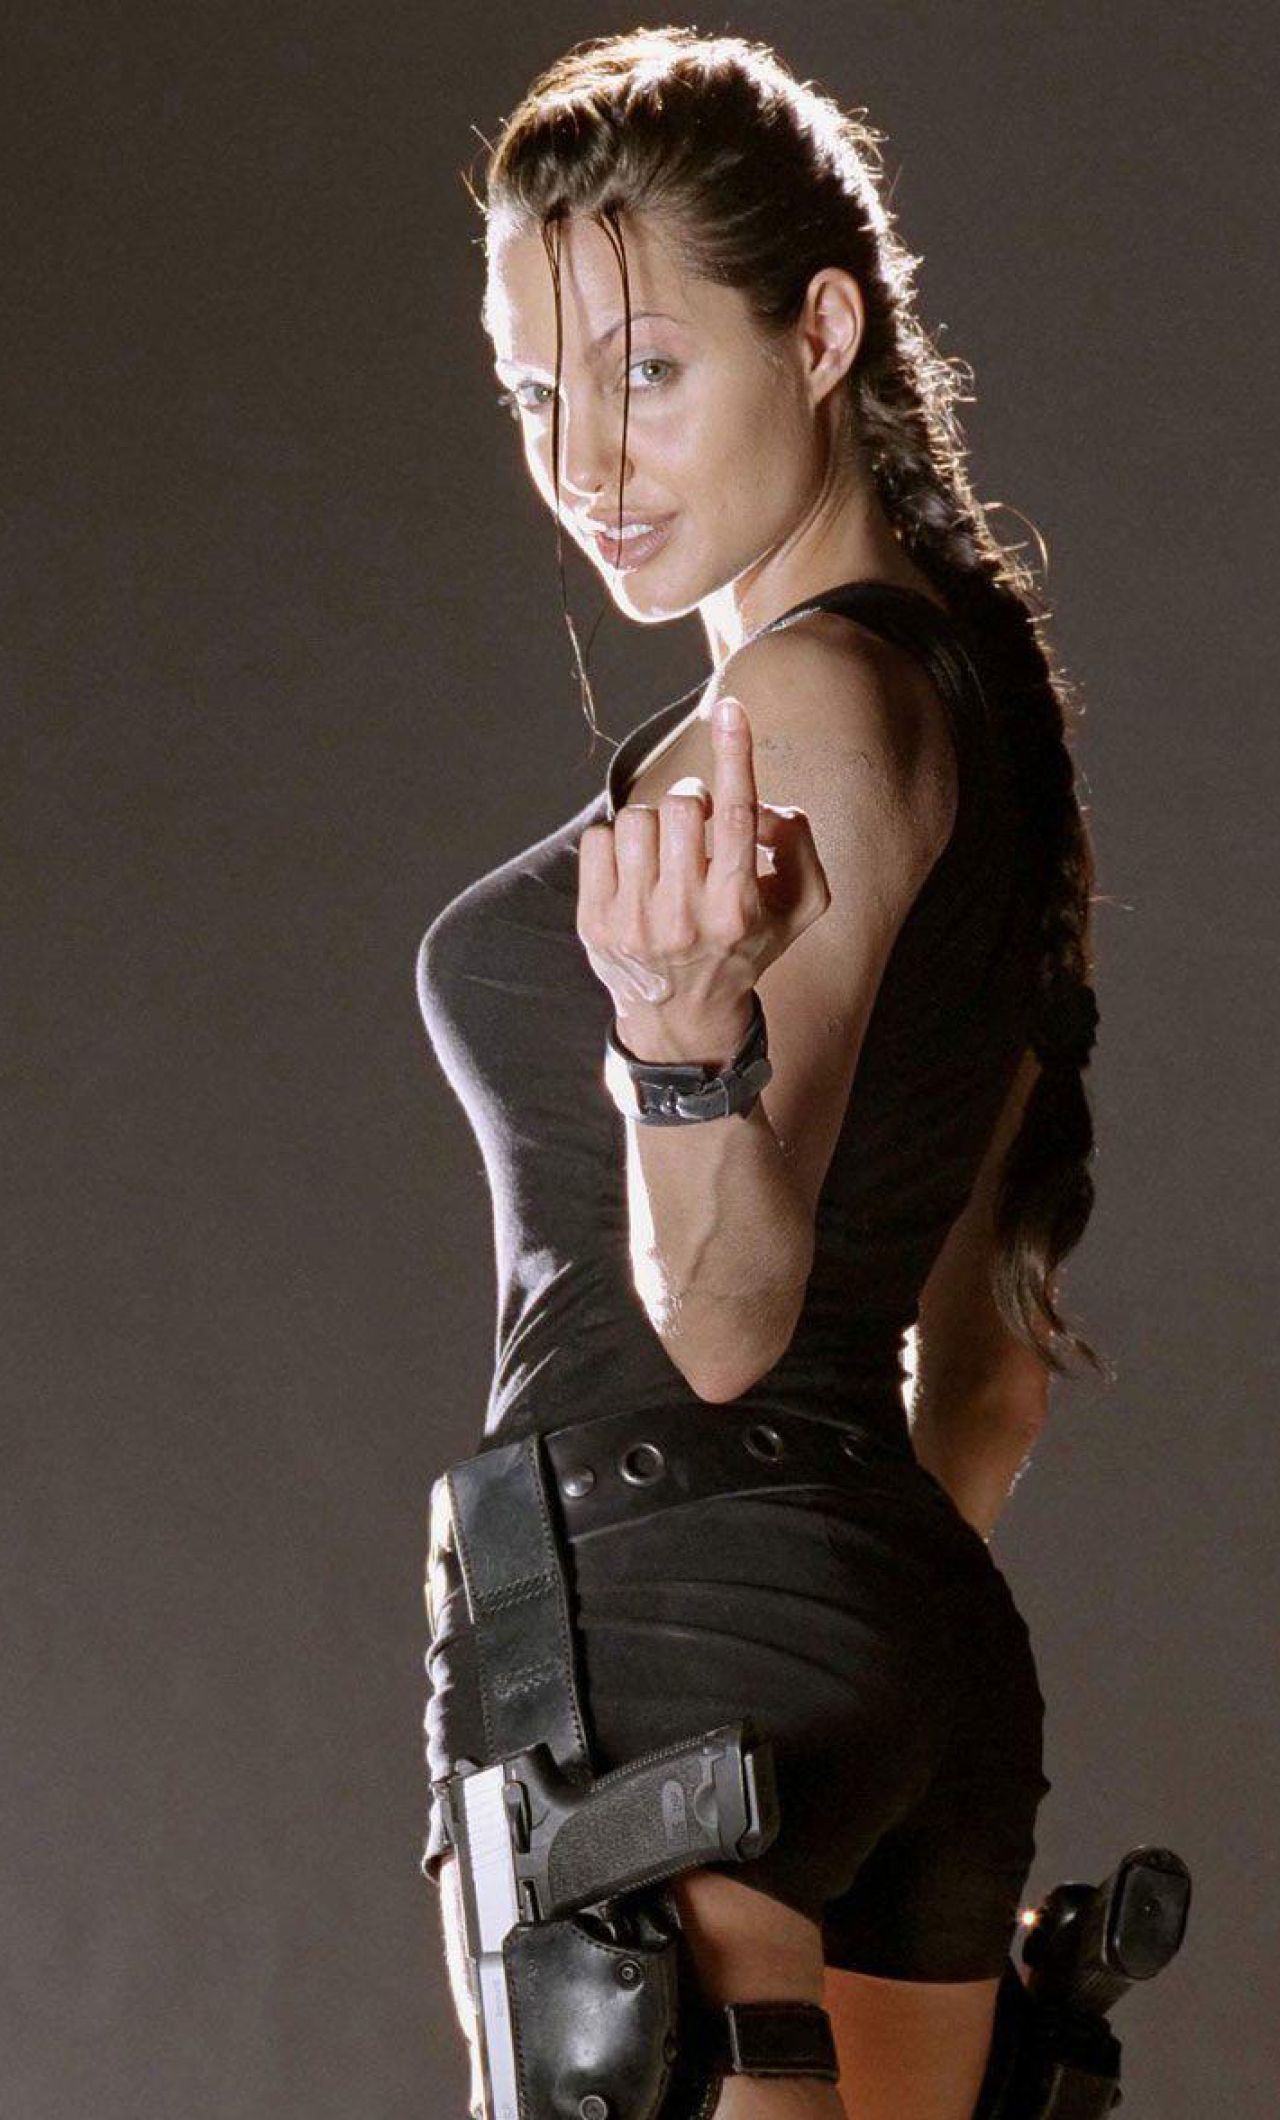 Angelina Jolie as Lara wallpaper iPhone 6 plus Wallpaper, HD Movies 4K Wallpaper, Image, Photo and Background